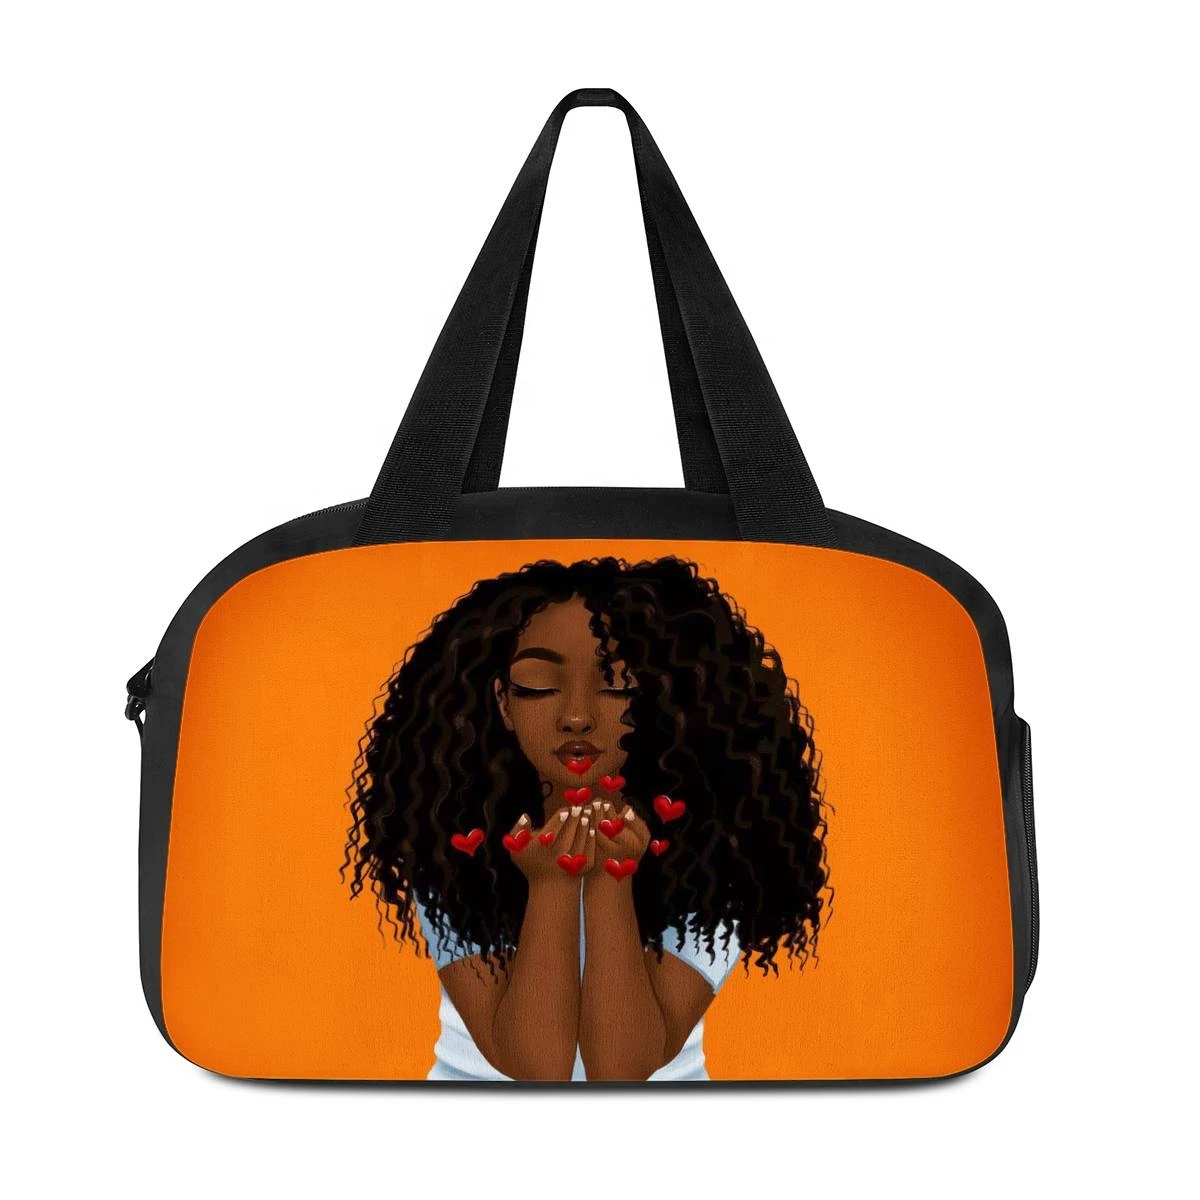 Luggage Travel Bags Women Black Art African Girls Printing Sport Female Large Traveling Duffle Tote Weekend Bags Mala De Viag